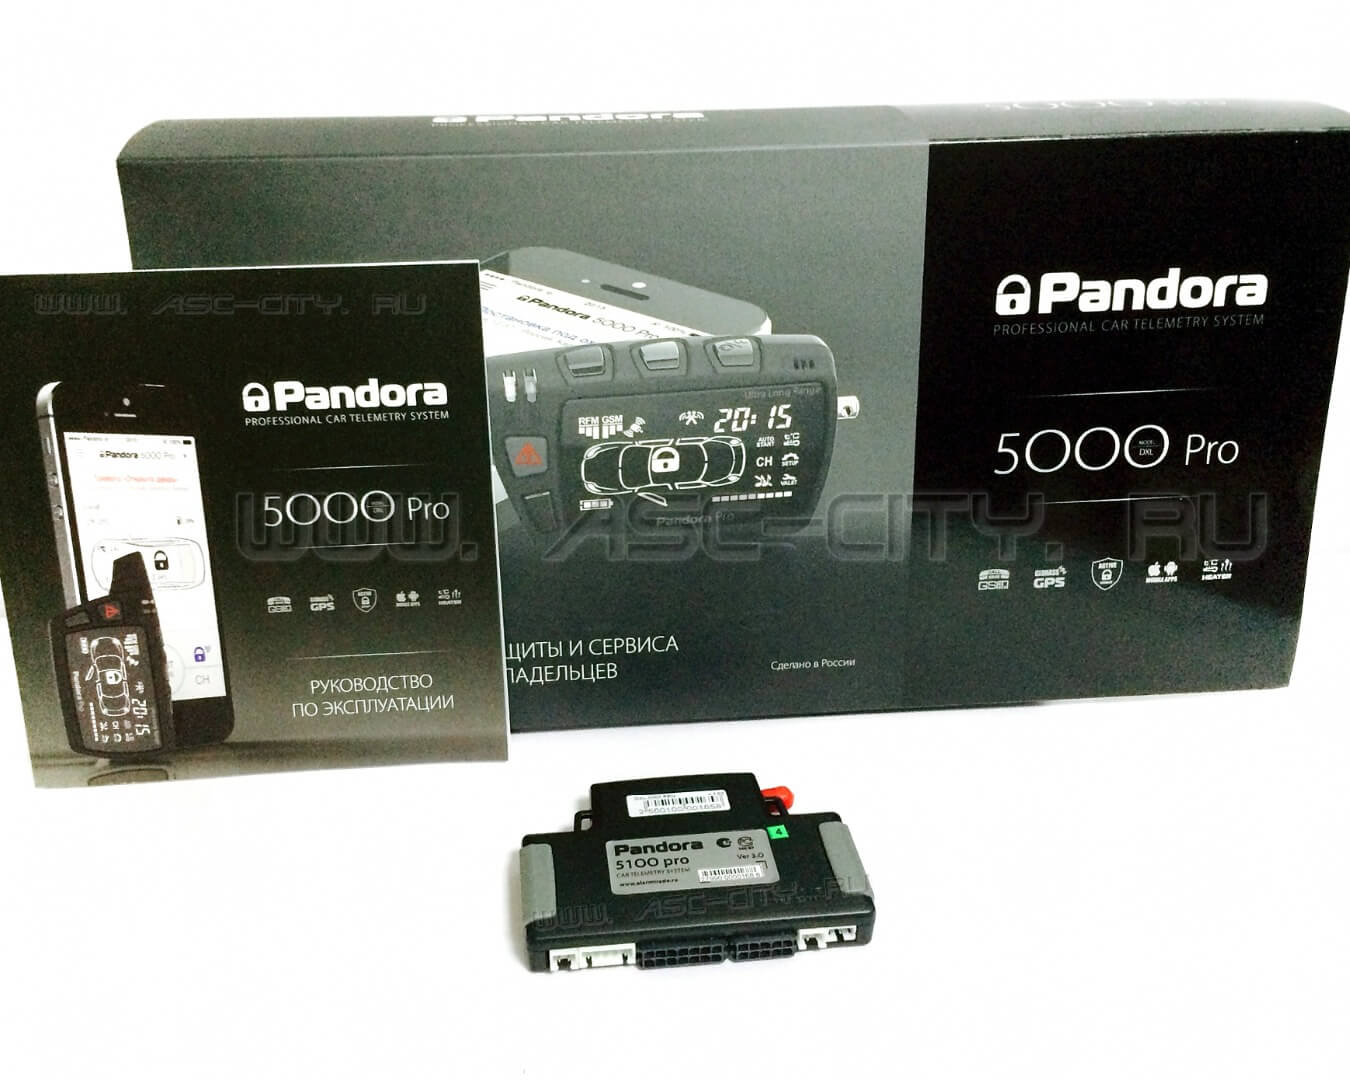 Gsm x. Сигнализация Пандора с GSM. Pandora 5000 Pro. Автосигнализации с GSM модулем Пандора. GSM модуль для сигнализации Пандора.